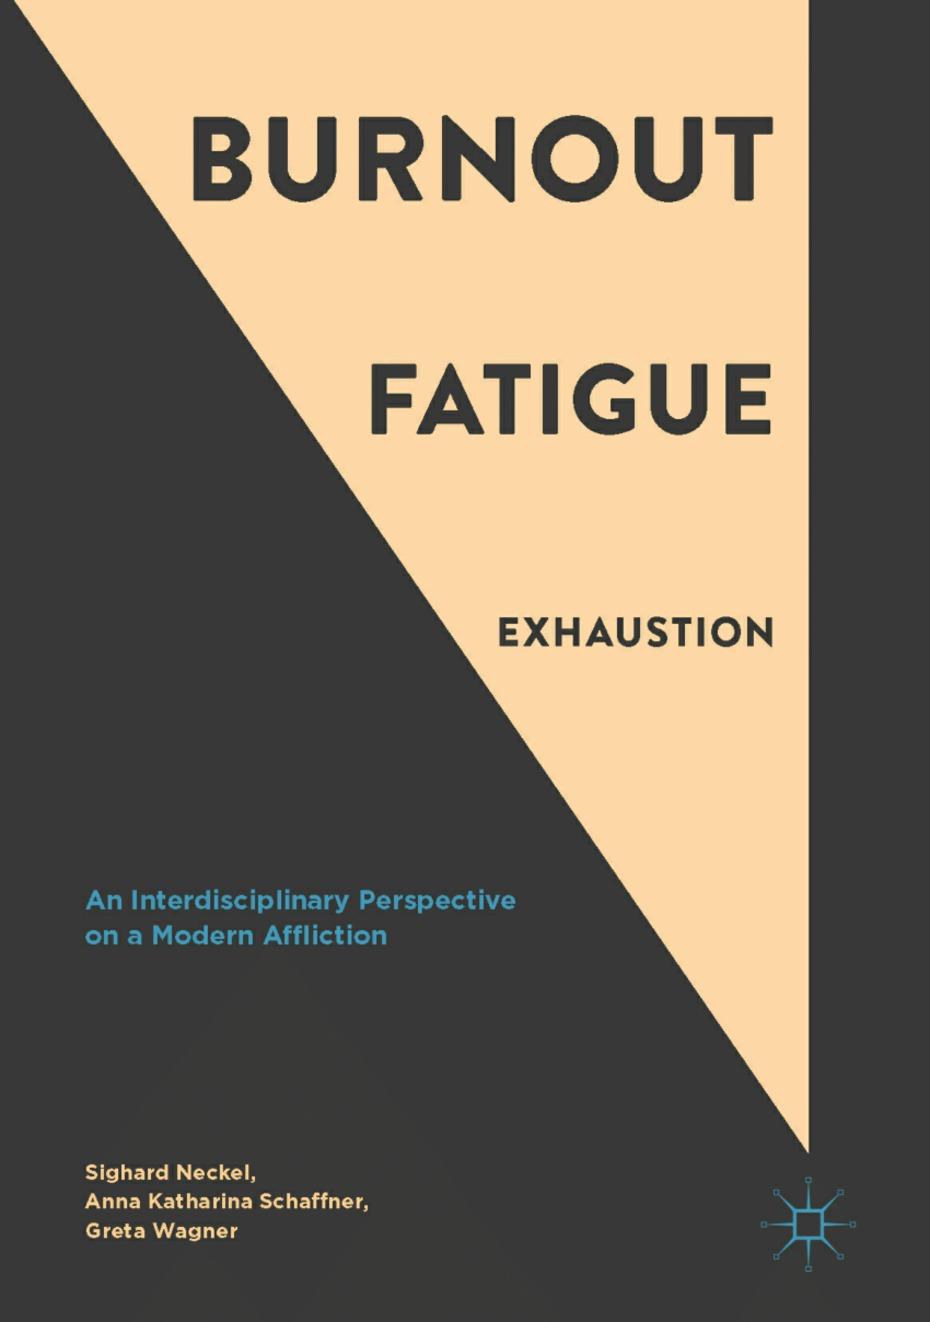 Burnout, Fatigue, Exhaustion (Cover)